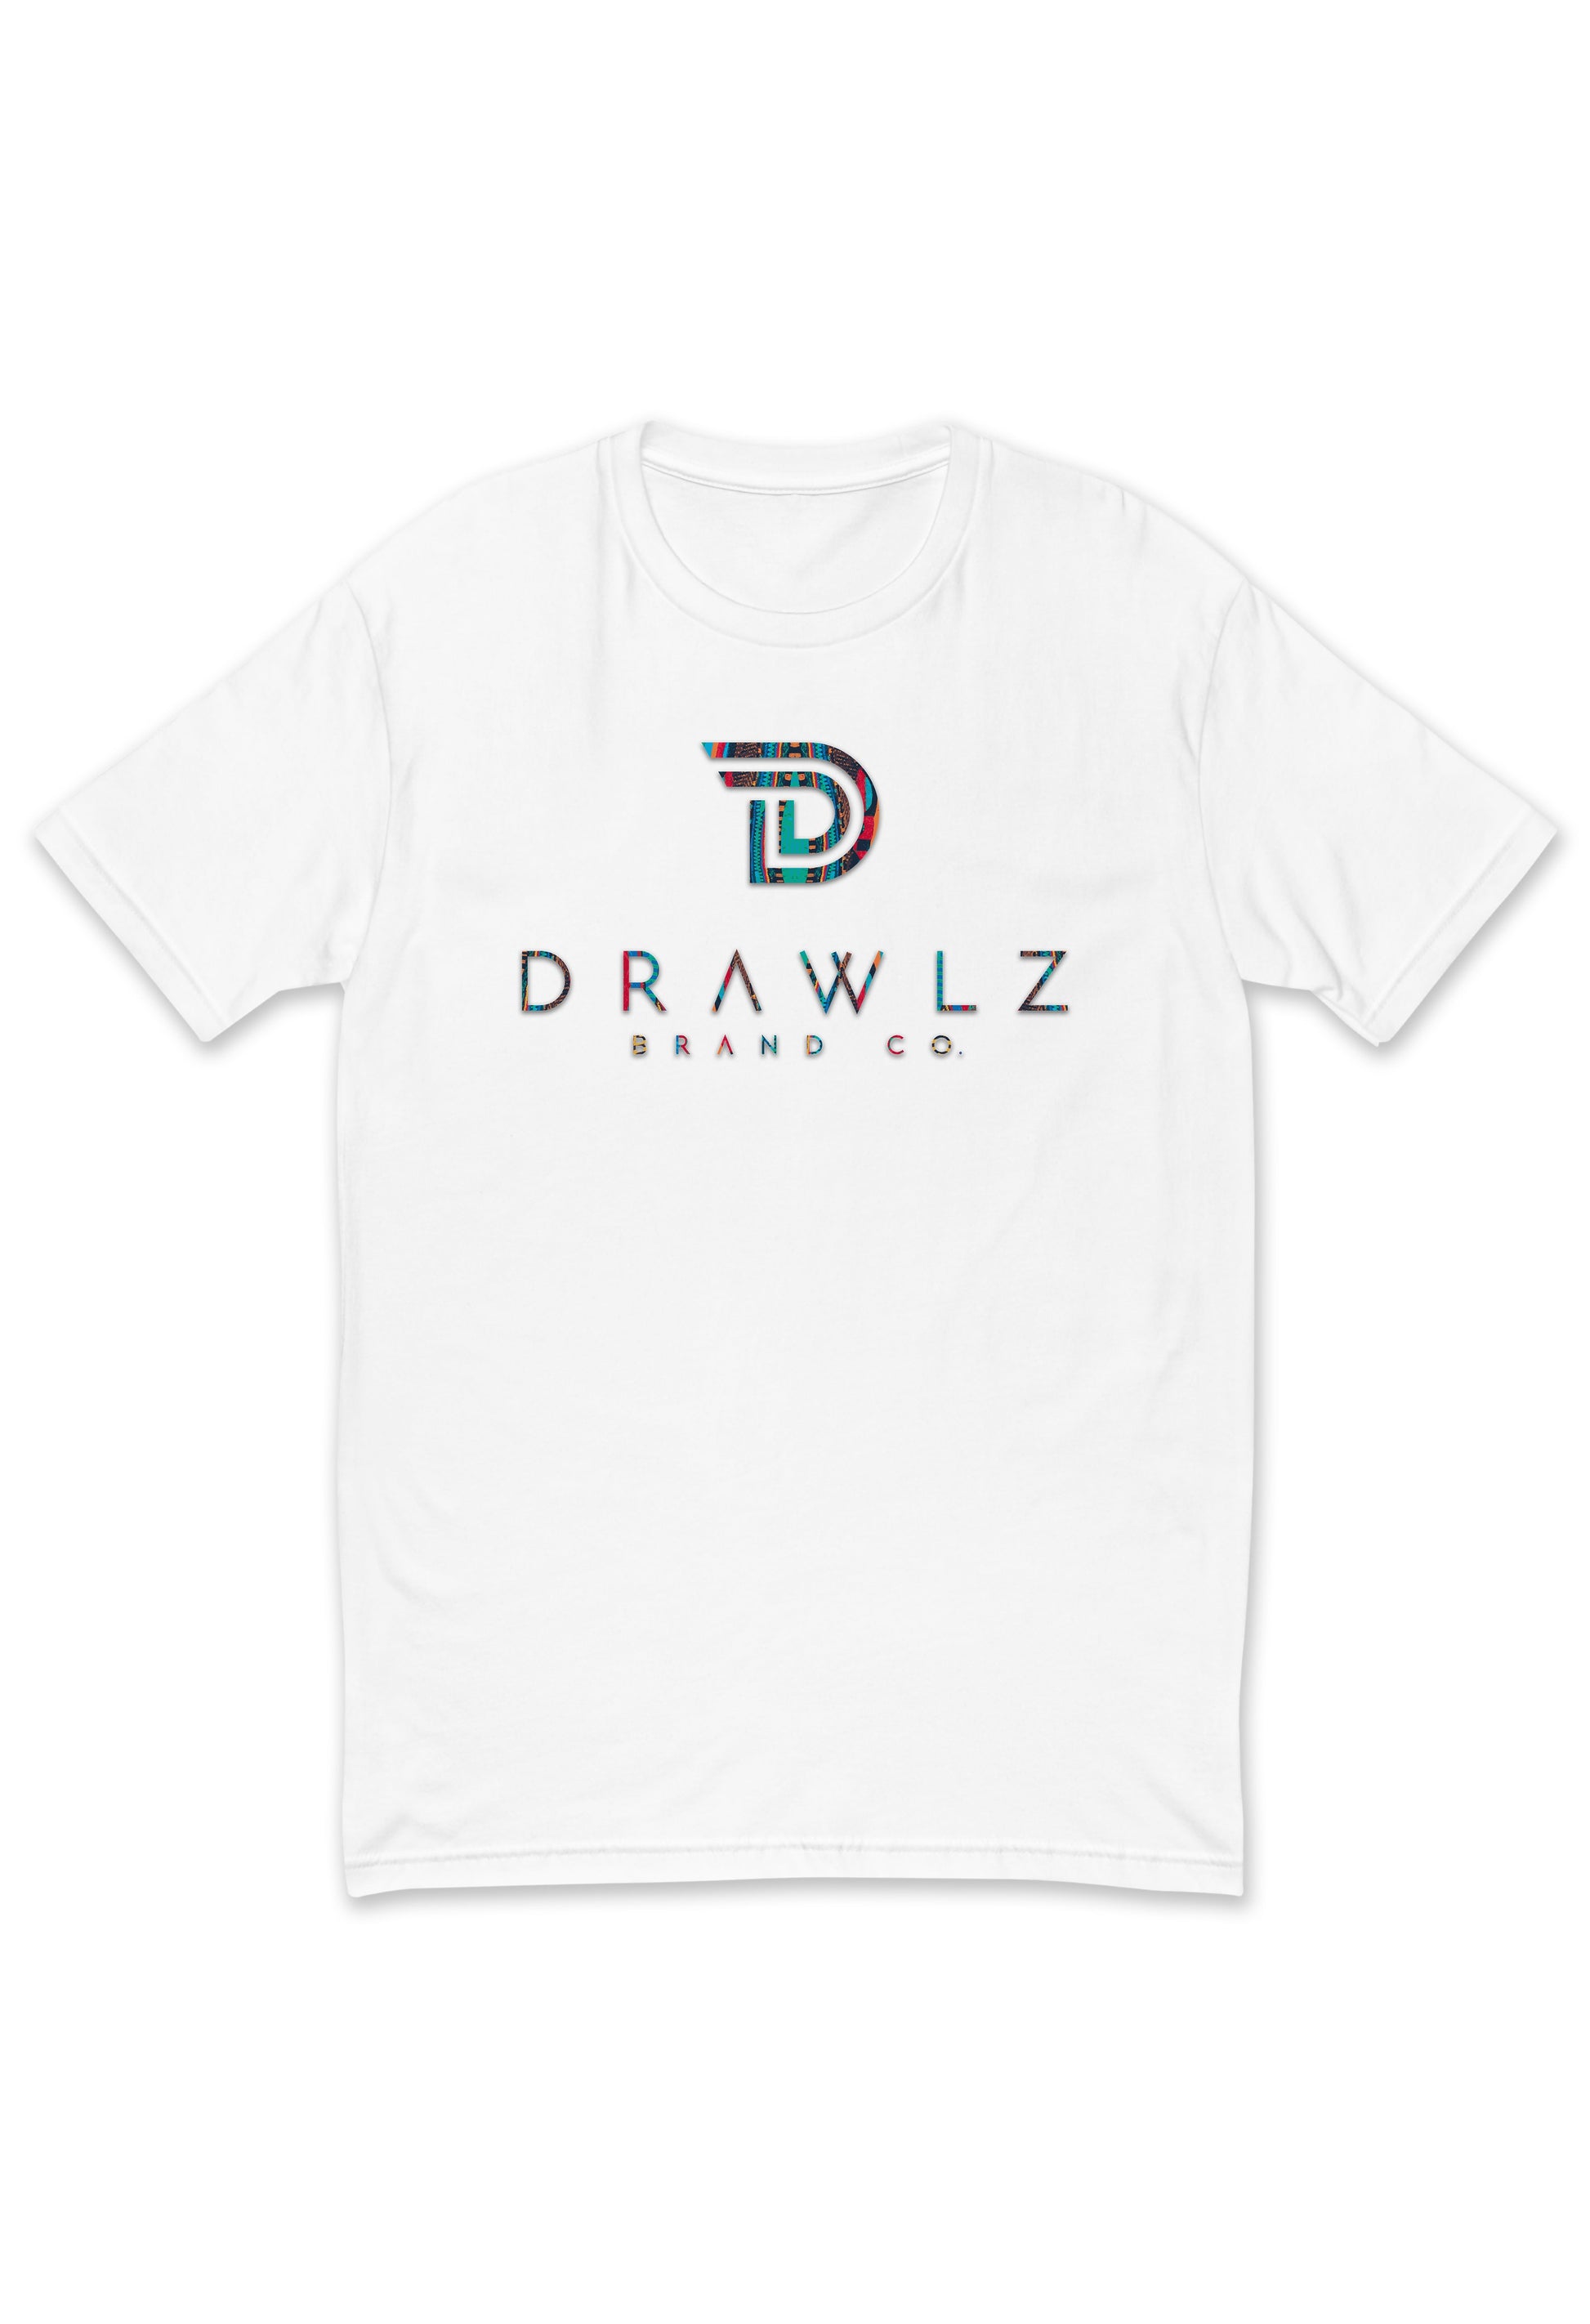 Drawlz Brand Co. , LLC The "B.I.G" Pack